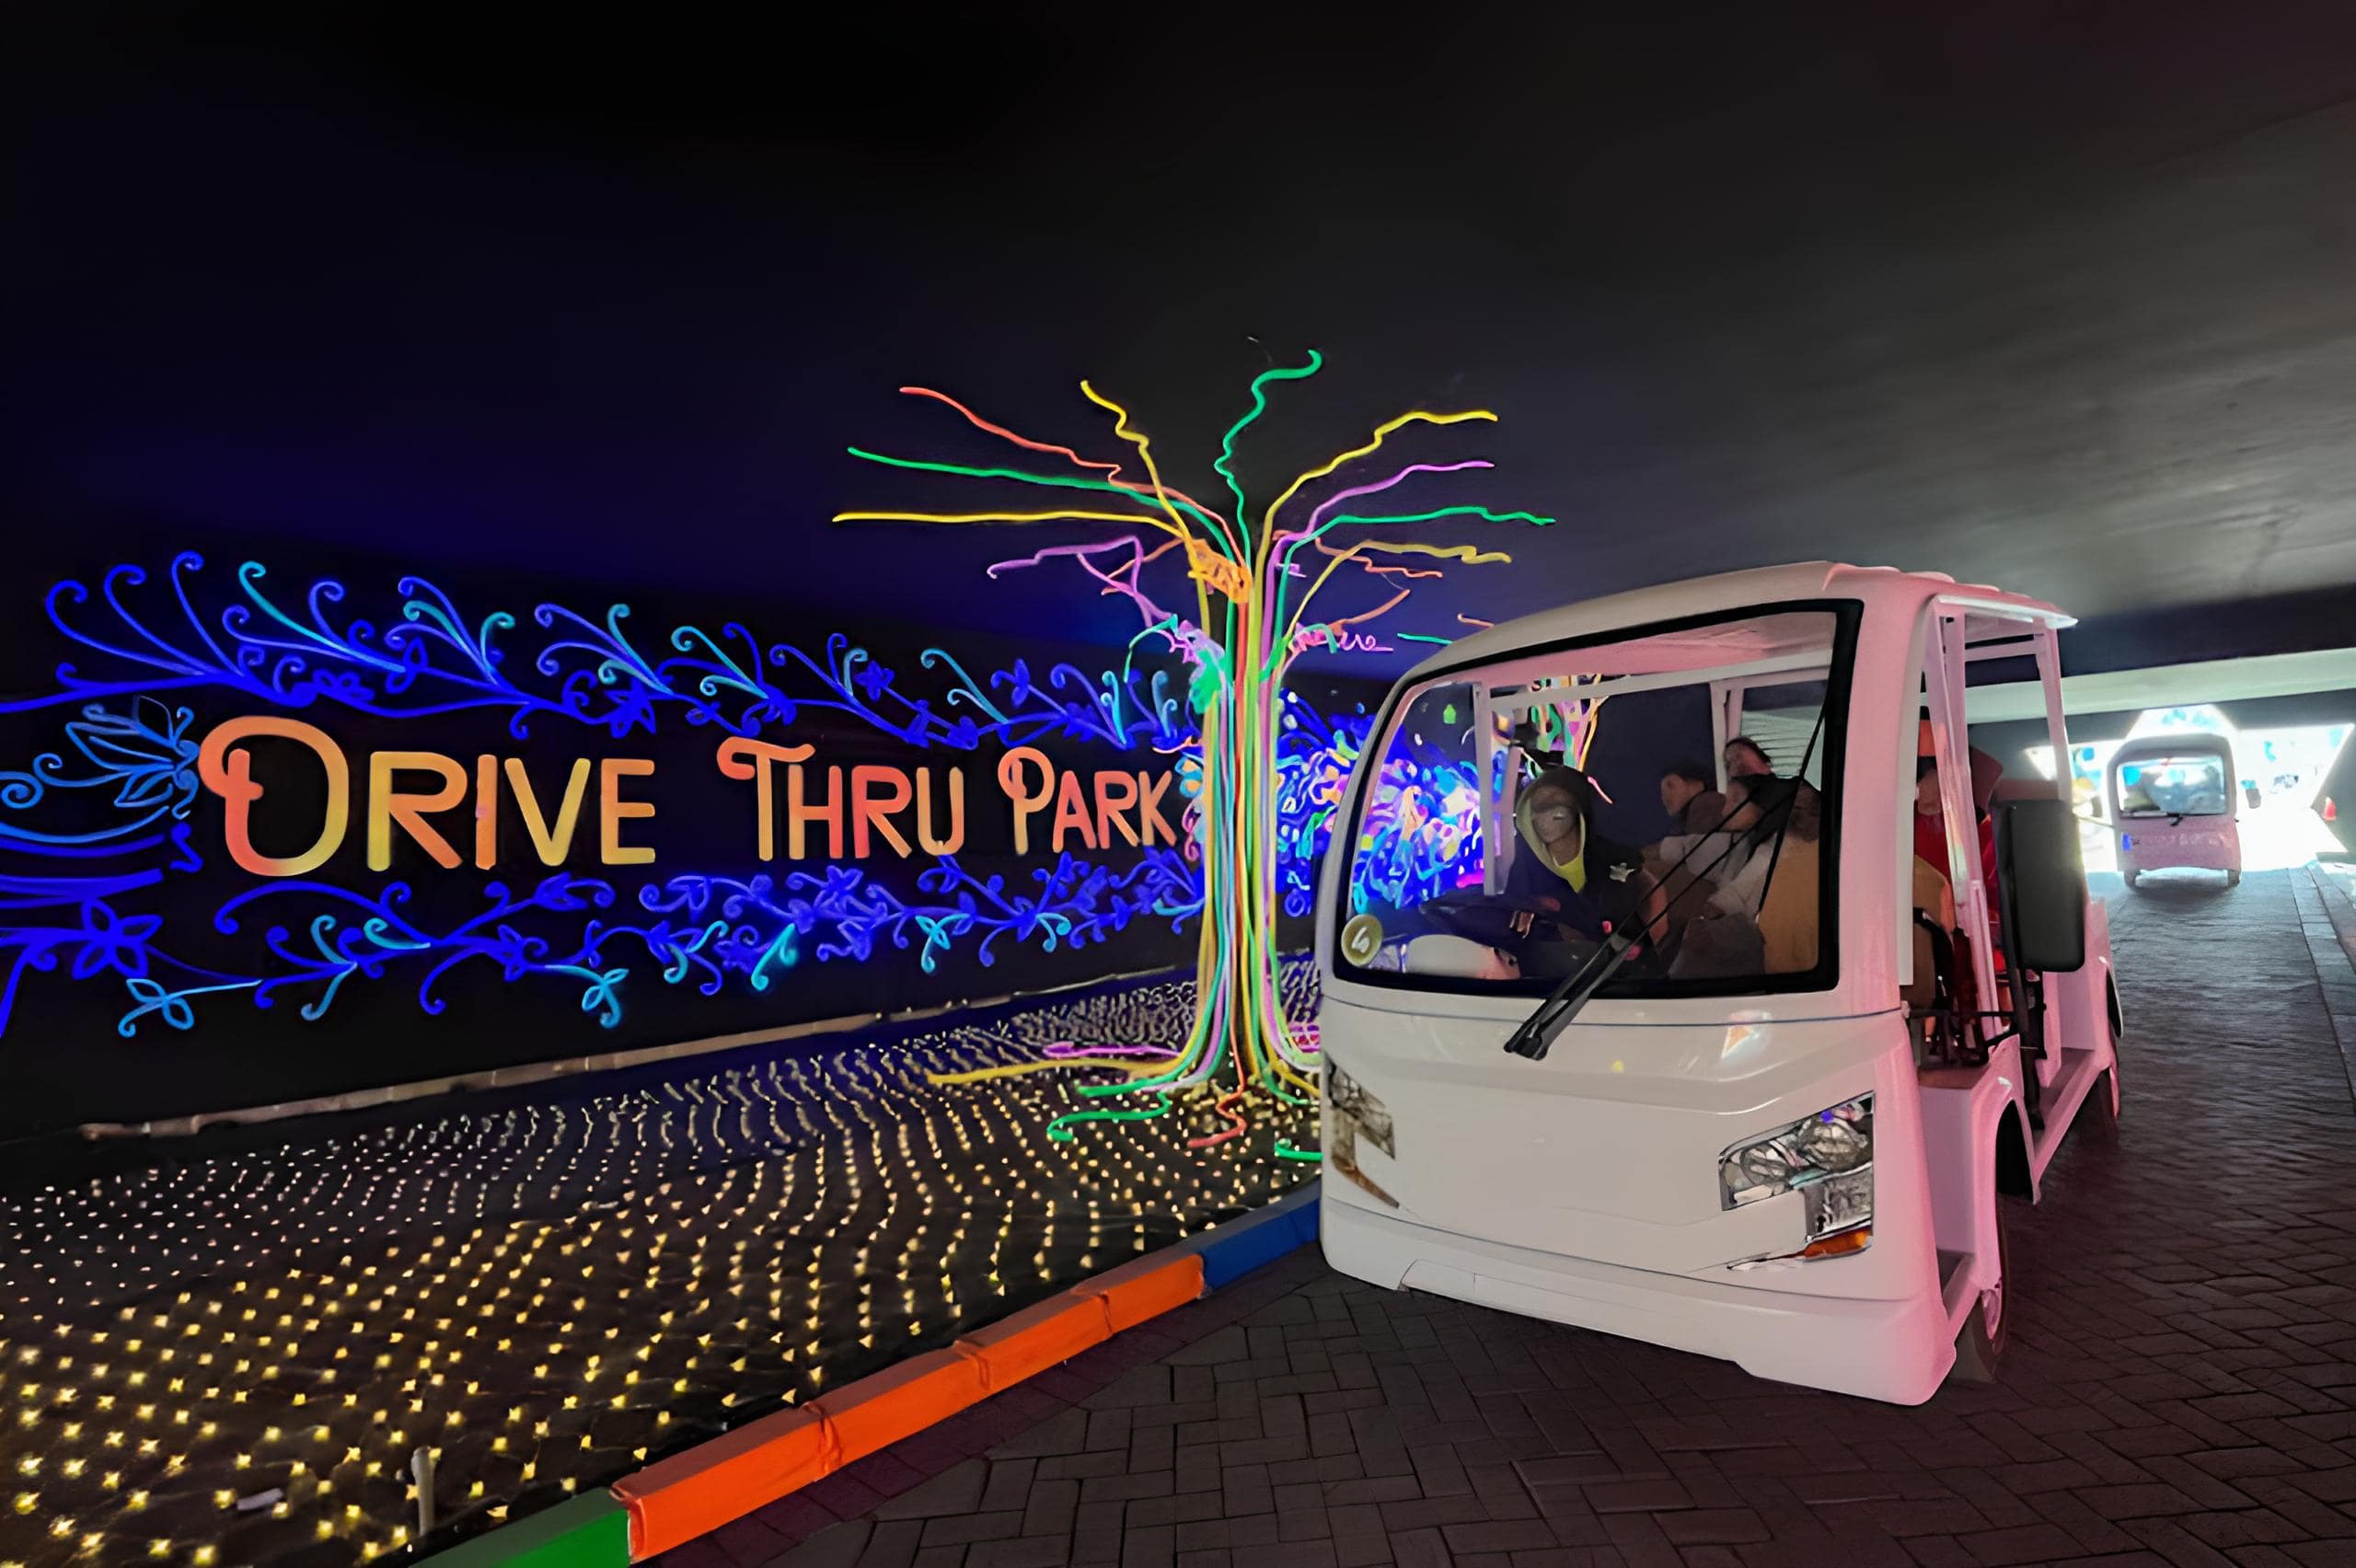 Harga Tiket Masuk Drive Thru Park Kota Batu Image From Google